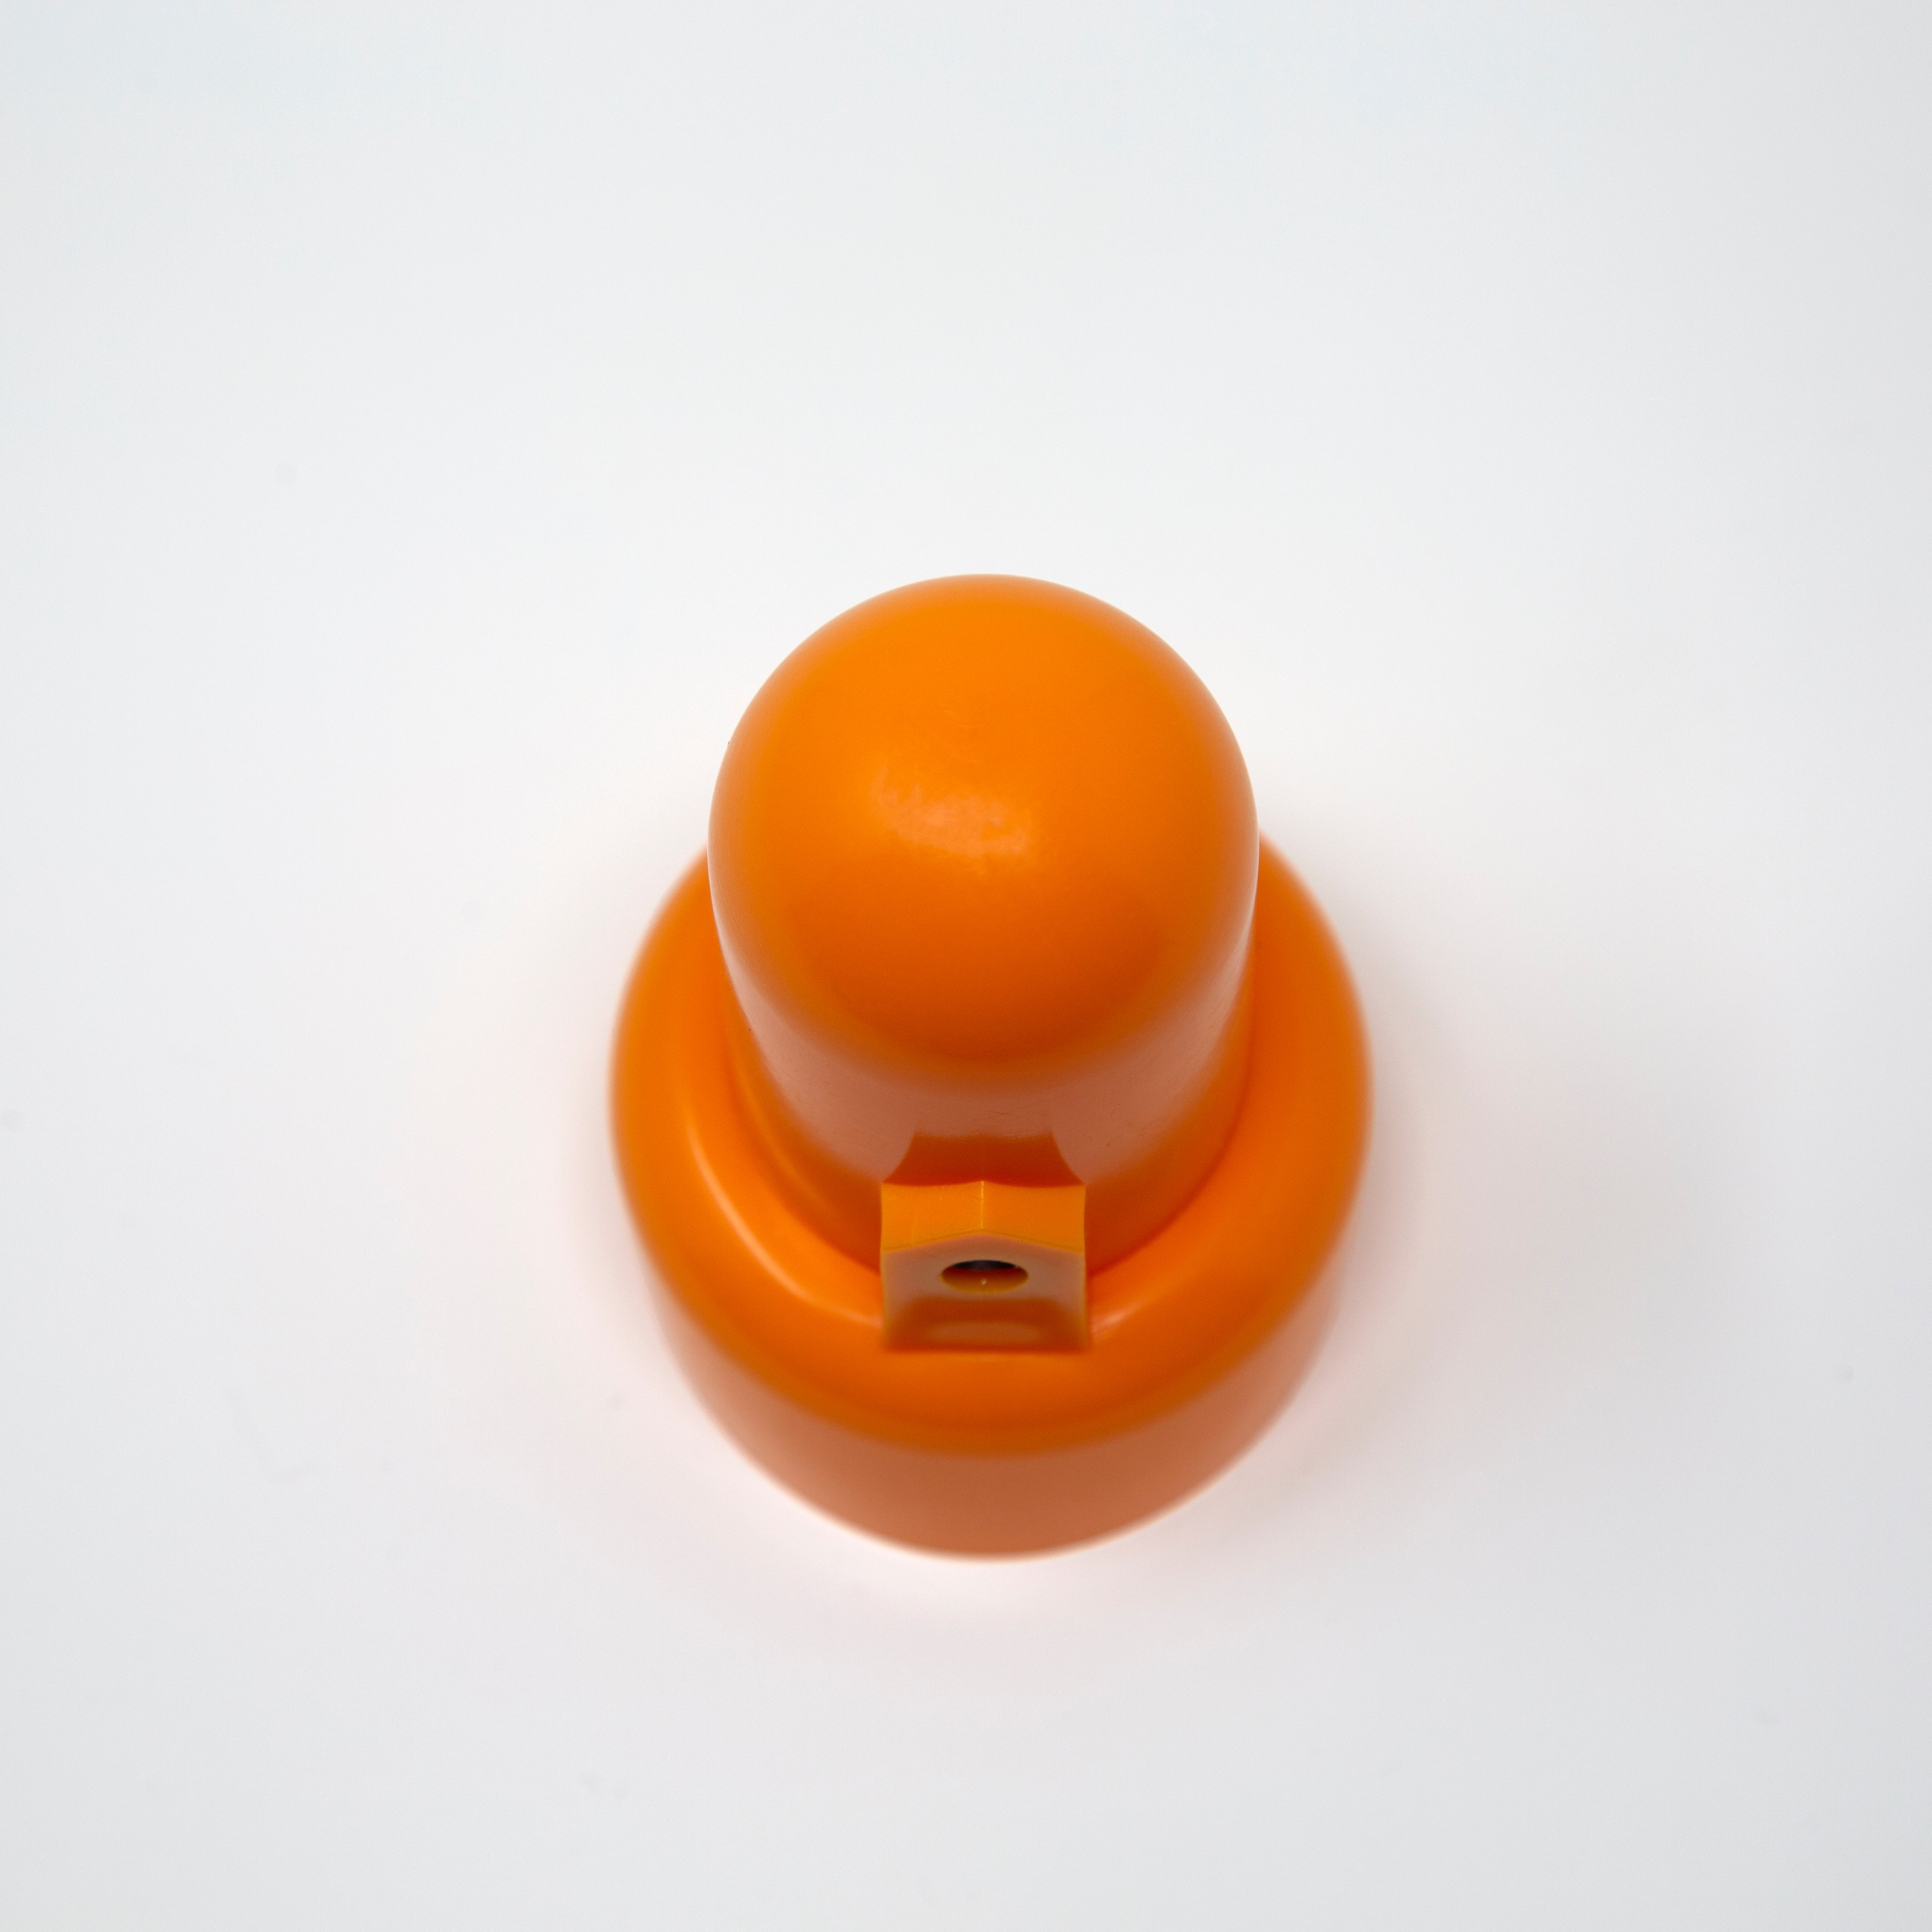 Pole Cap - Small Orange - Qty 4